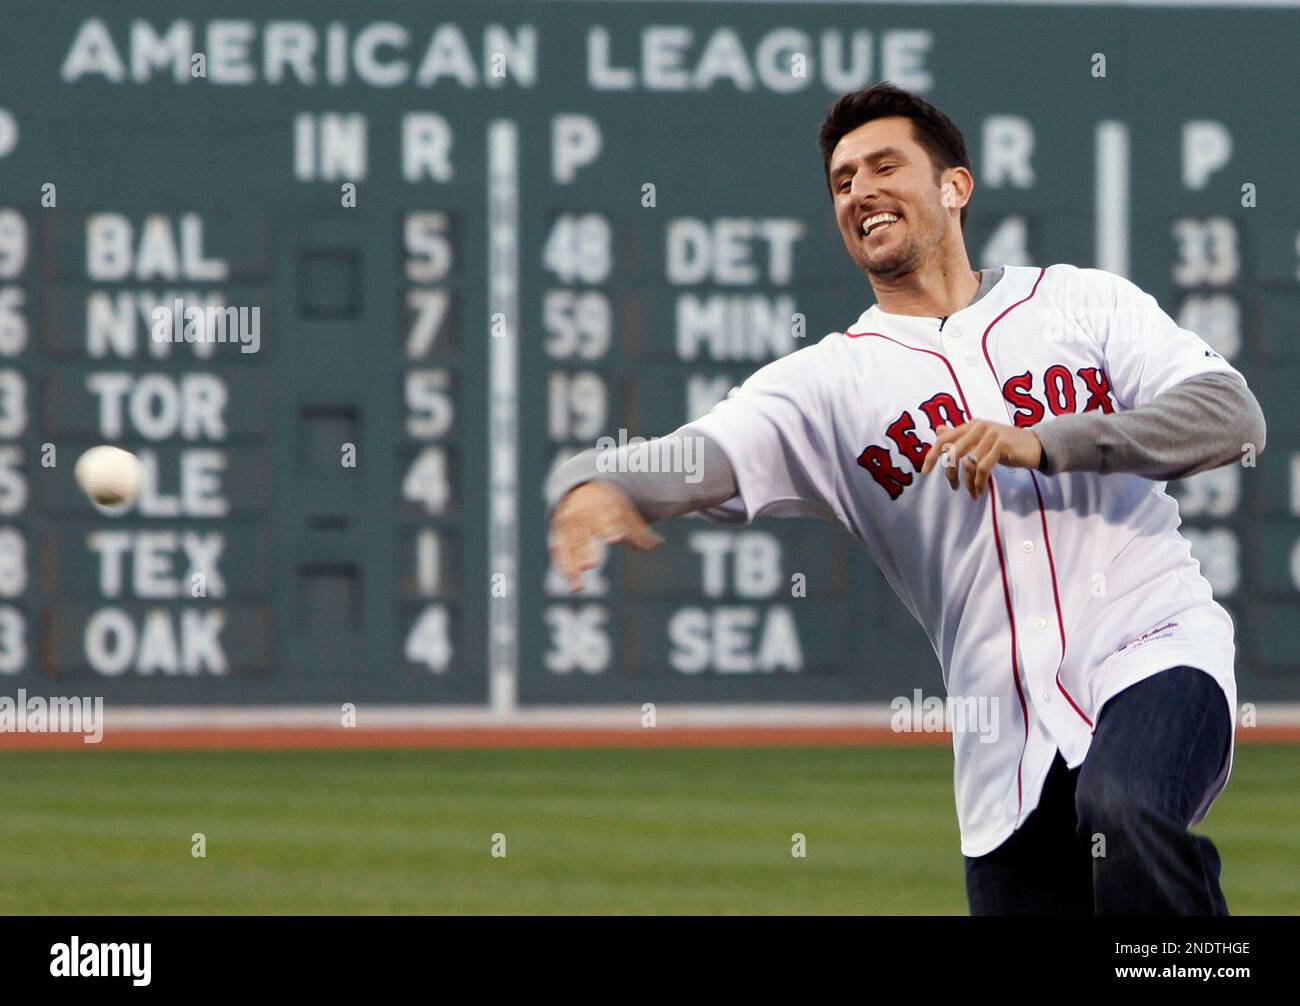 Nomar Garciaparra leads Red Sox hit parade - The Boston Globe